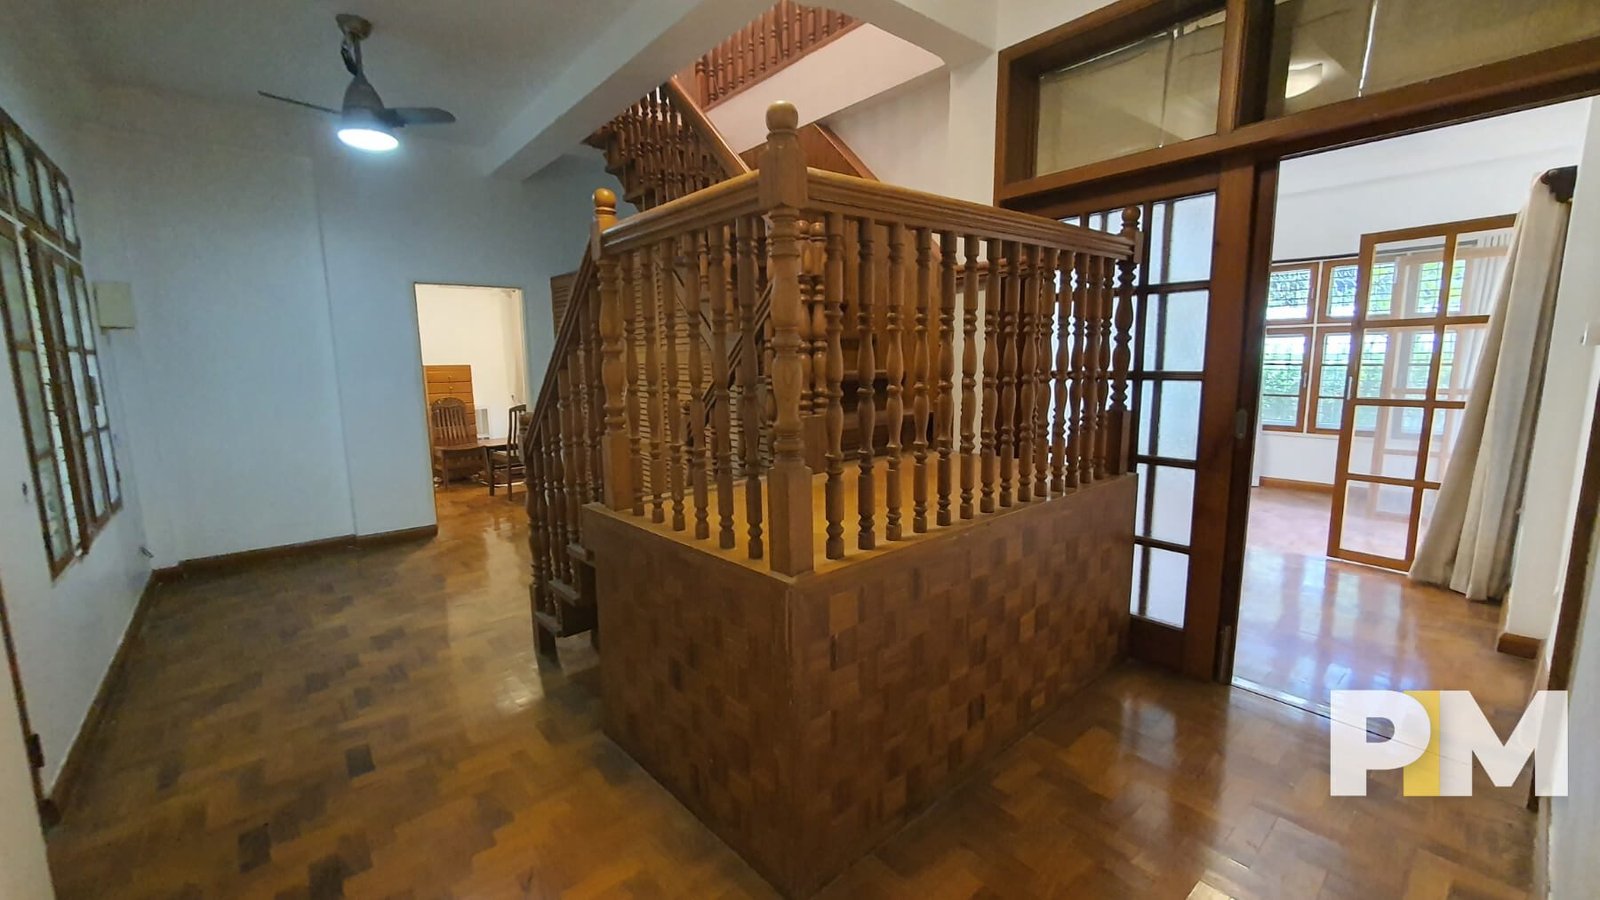 Stair case view - Myanmar Real Estate